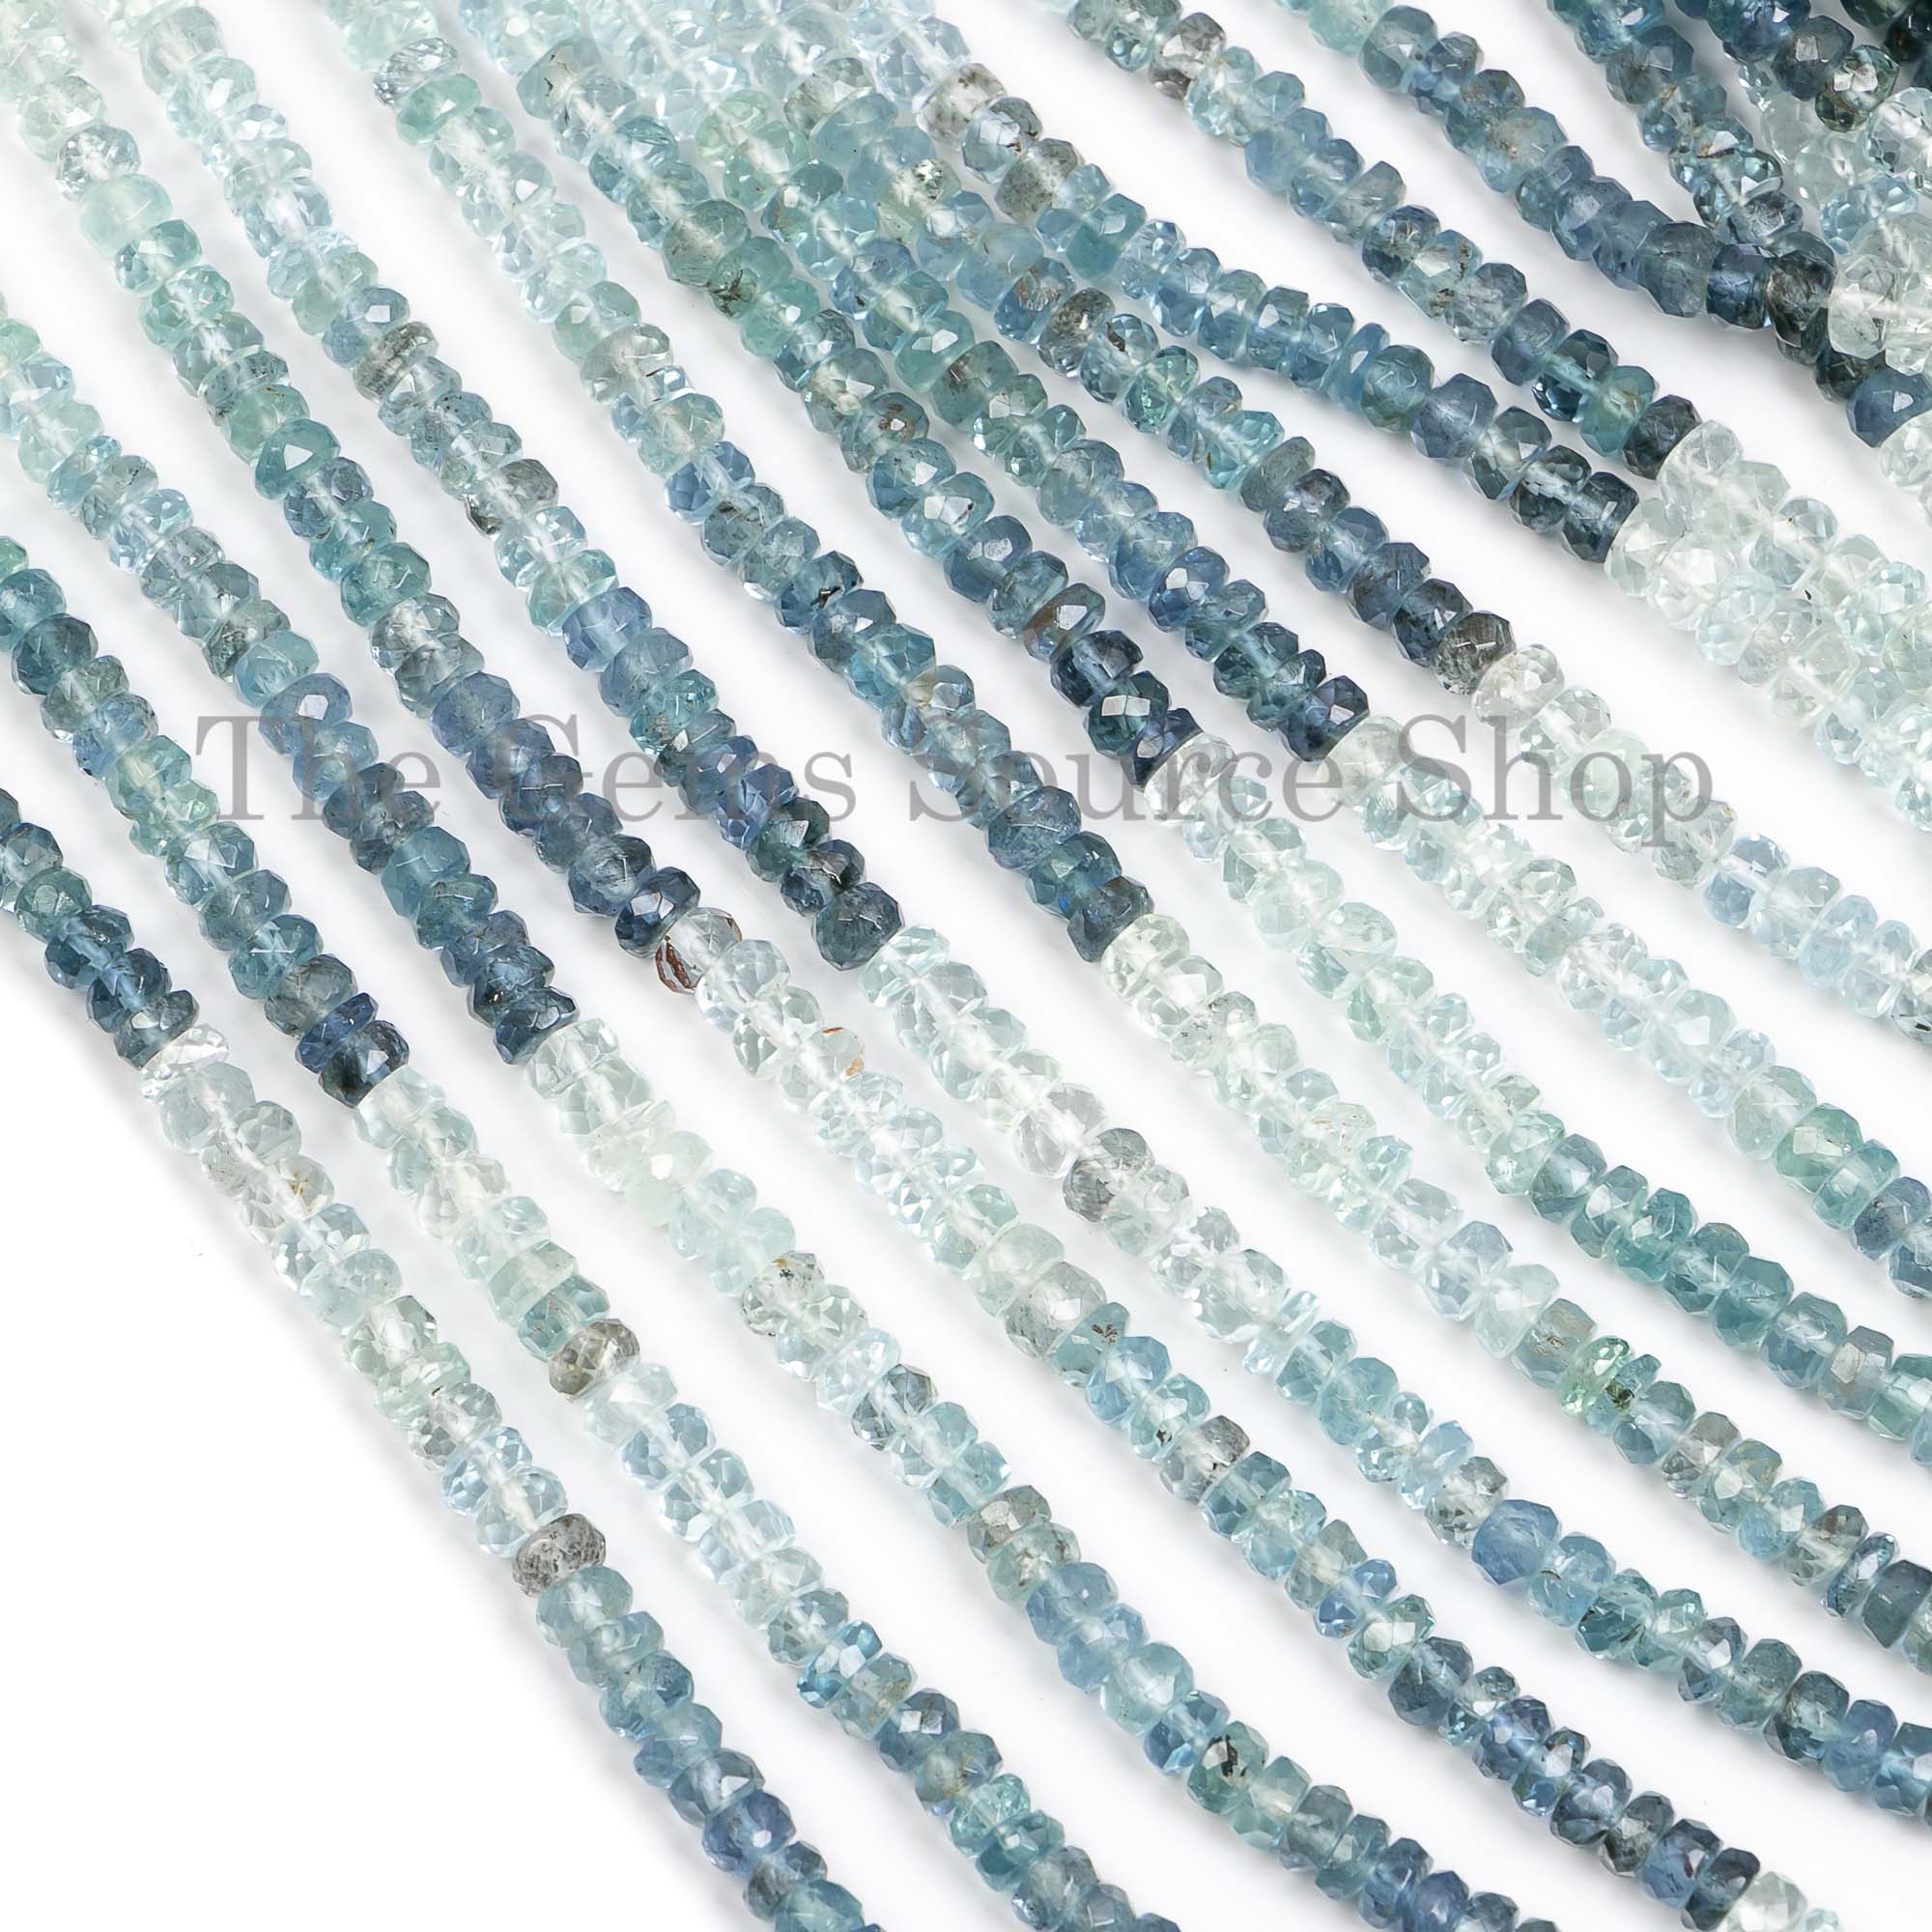 Aquamarine Faceted Rondelle Shape Beads, Faceted Aquamarine Beads, Rondelle Shape Aquamarine Beads